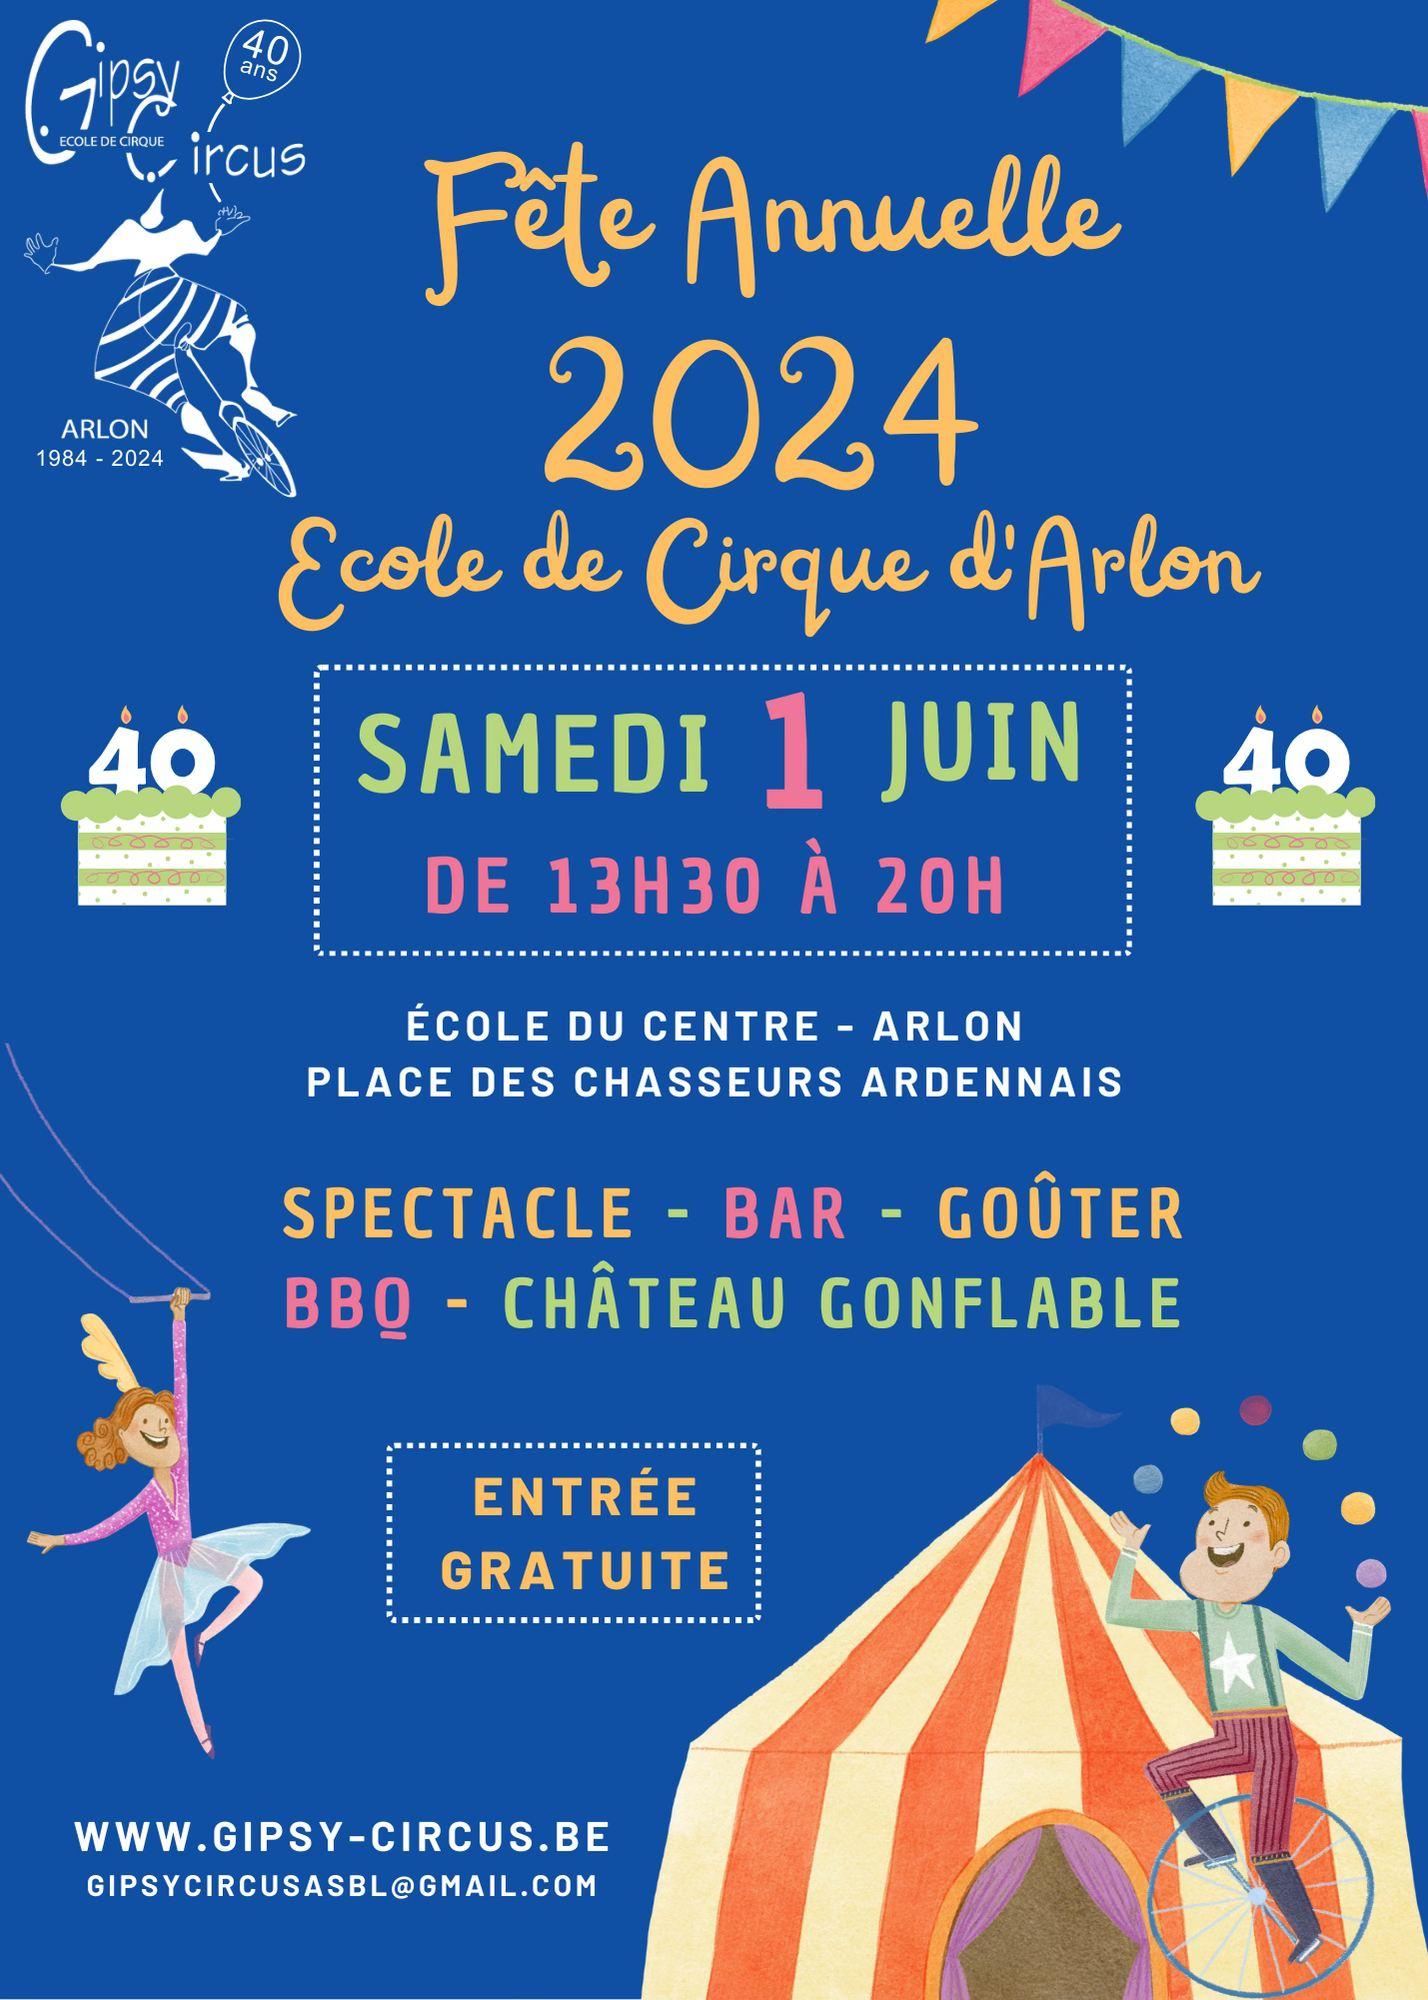 Fête annuelle 2024 - 40 ans de Gipsy Circus